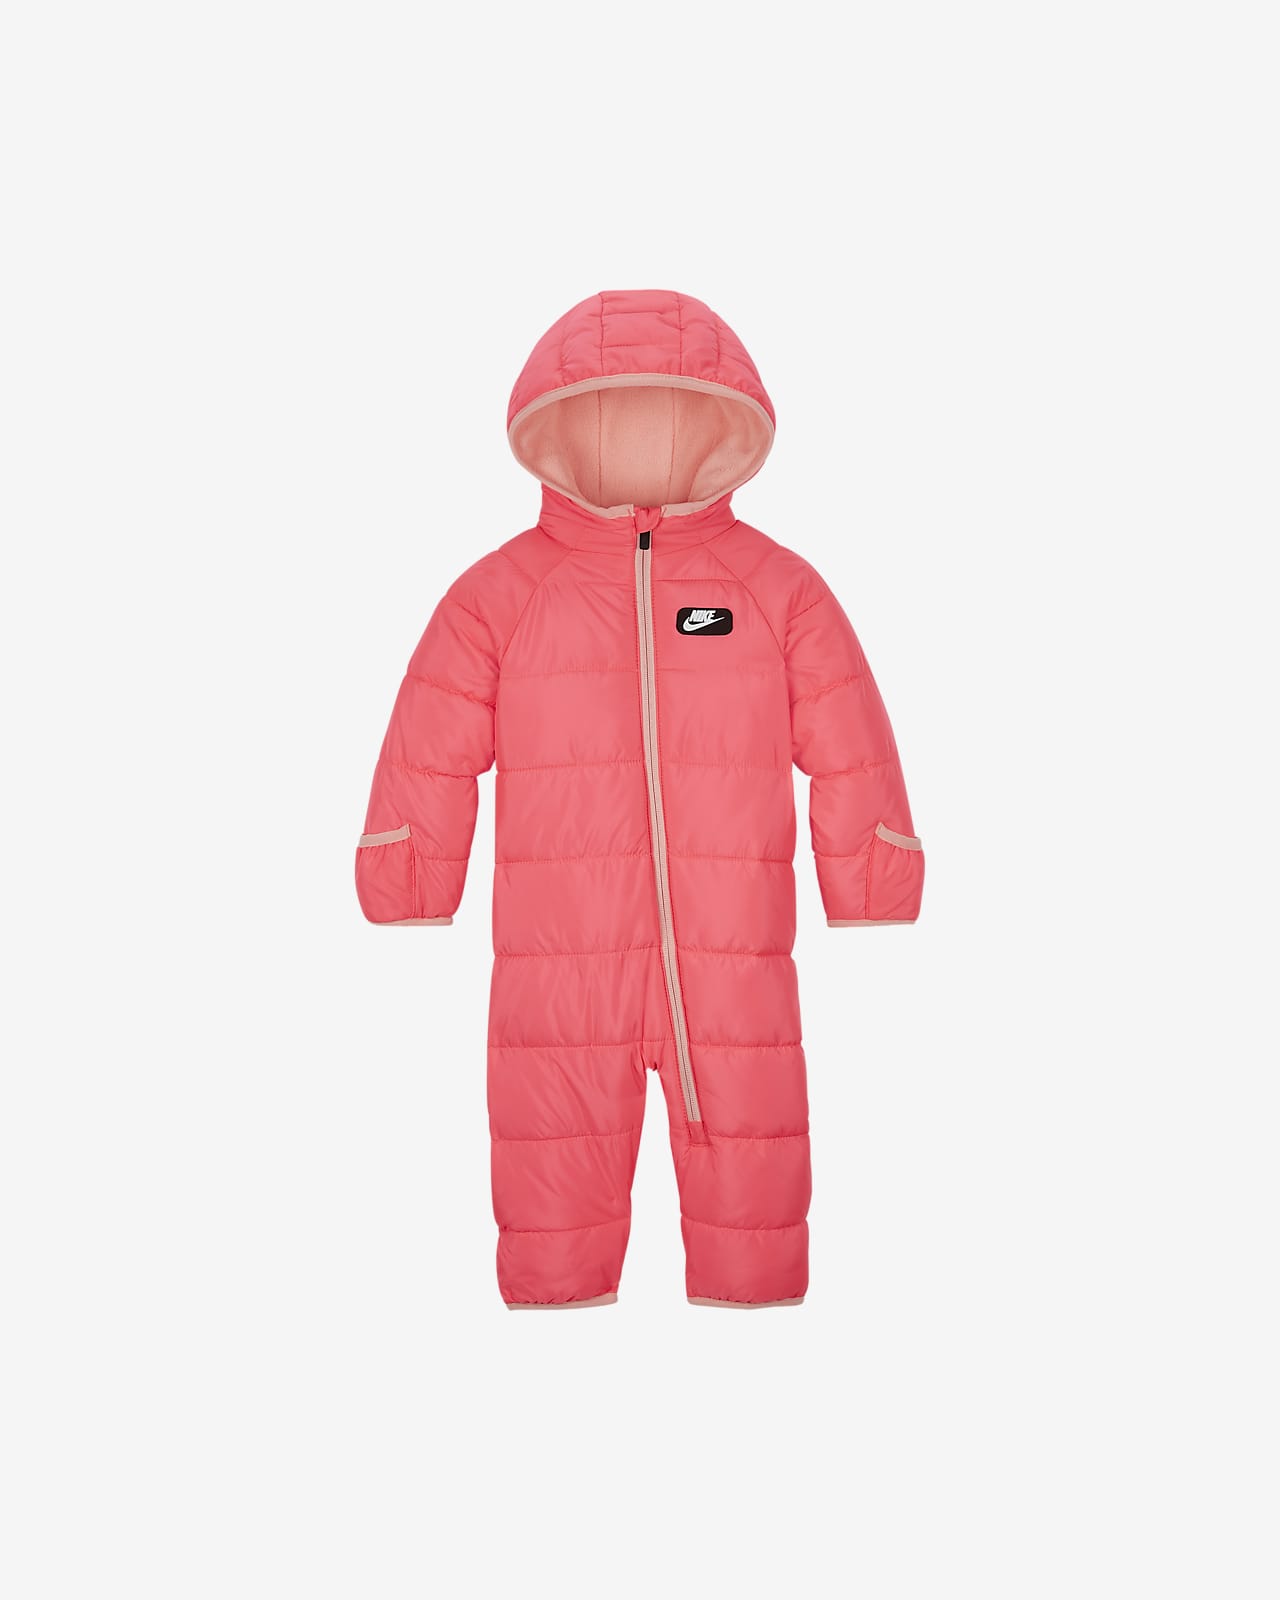 Nike Baby (12-24M) Puffer Snowsuit